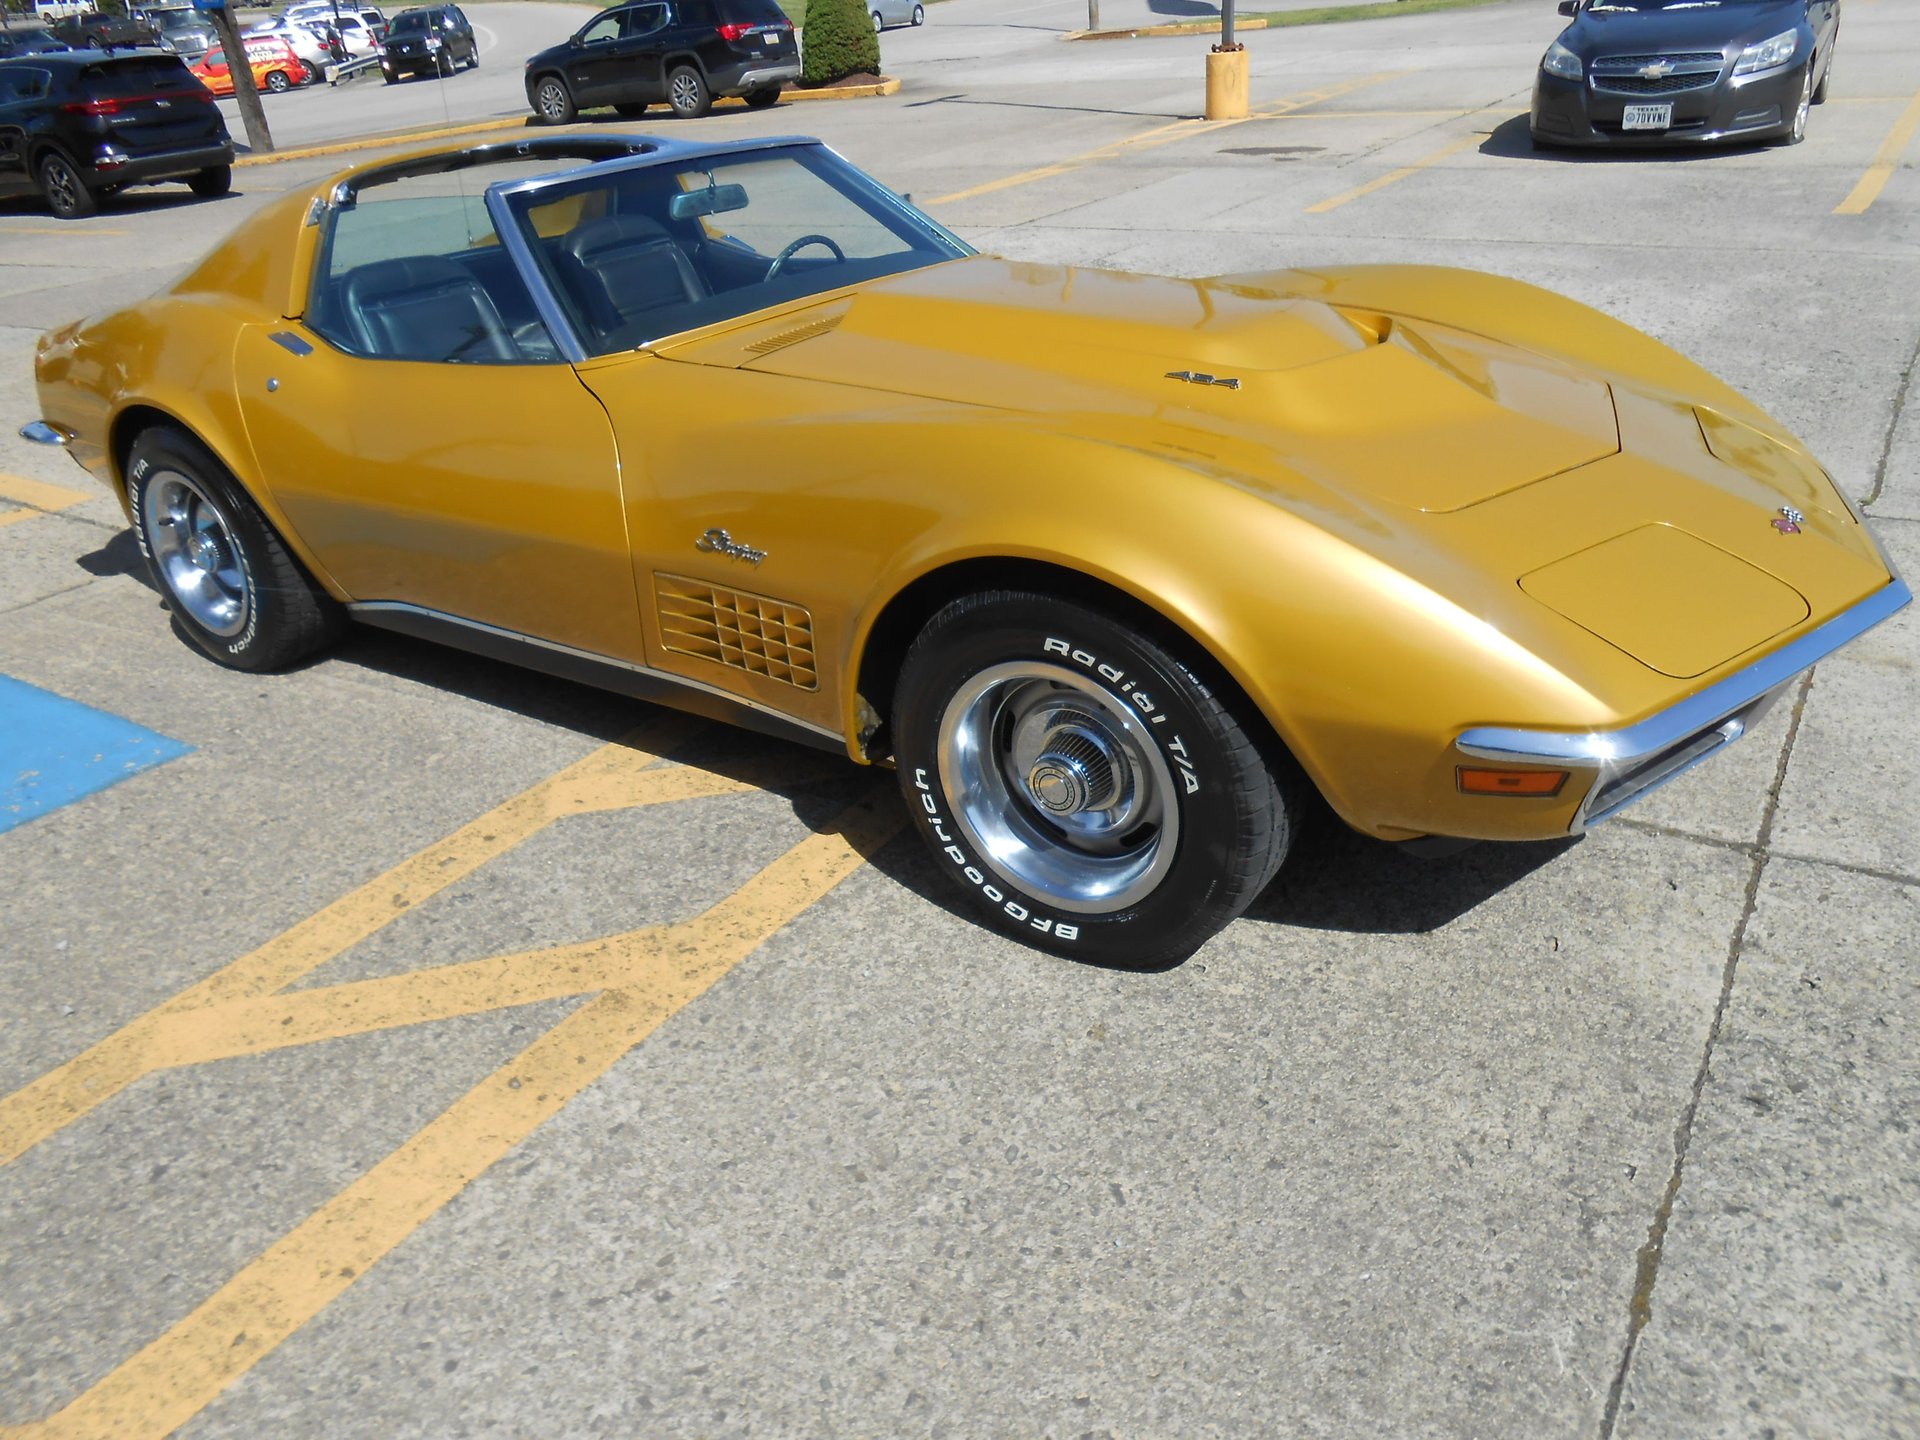 1972 Chevrolet Corvette | GAA Classic Cars